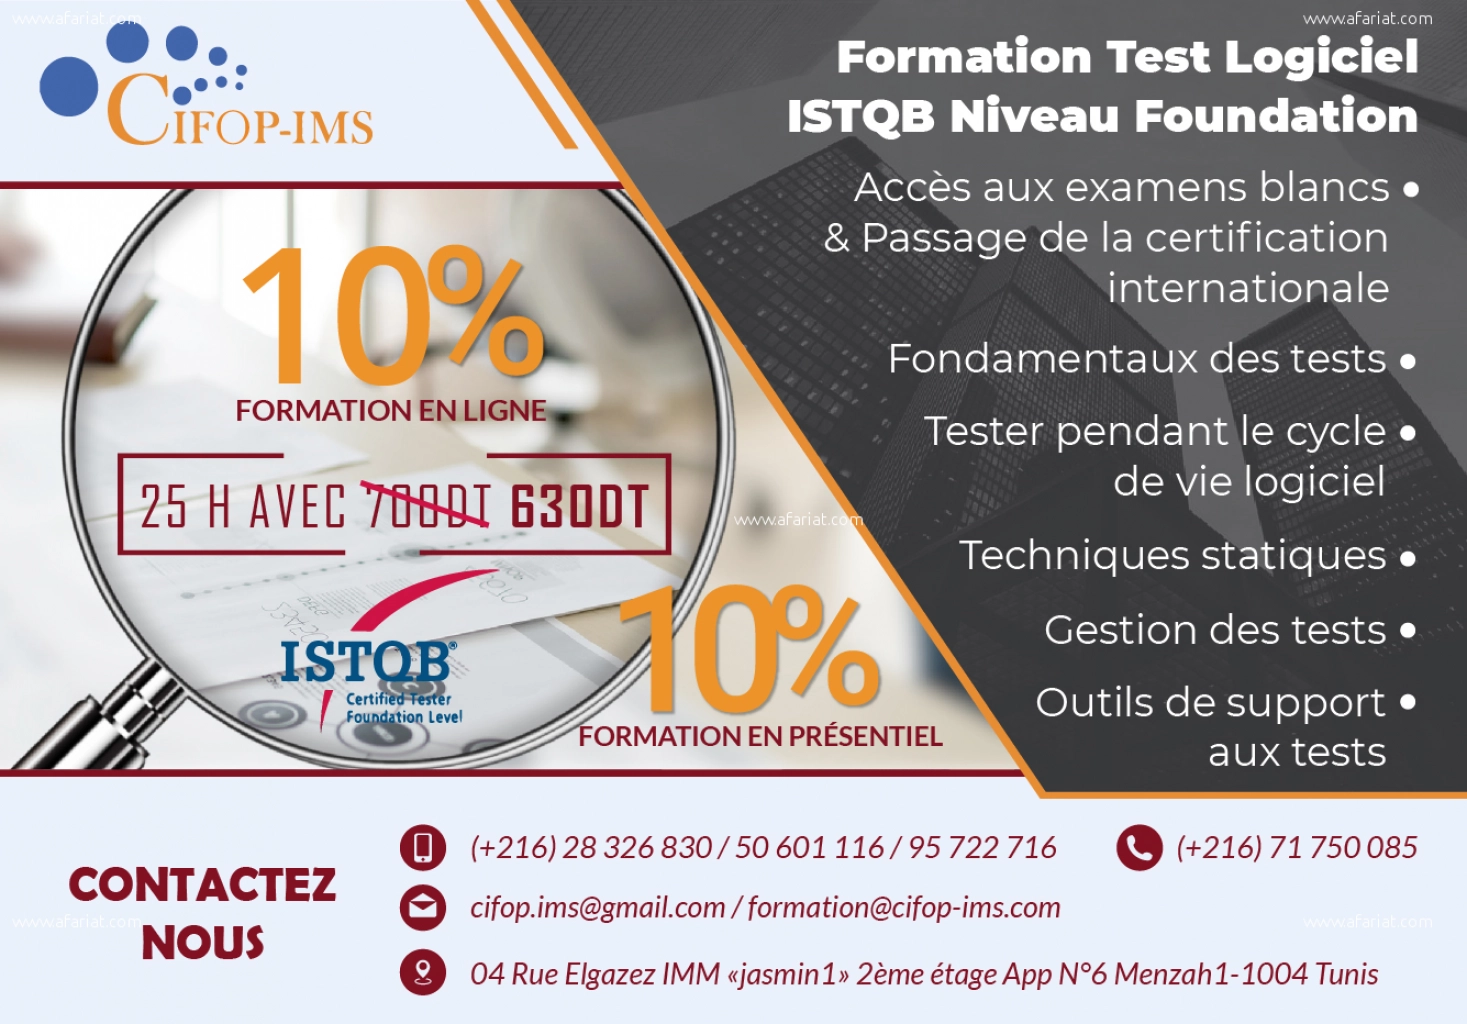 Formation Test logiciel, ISTQB